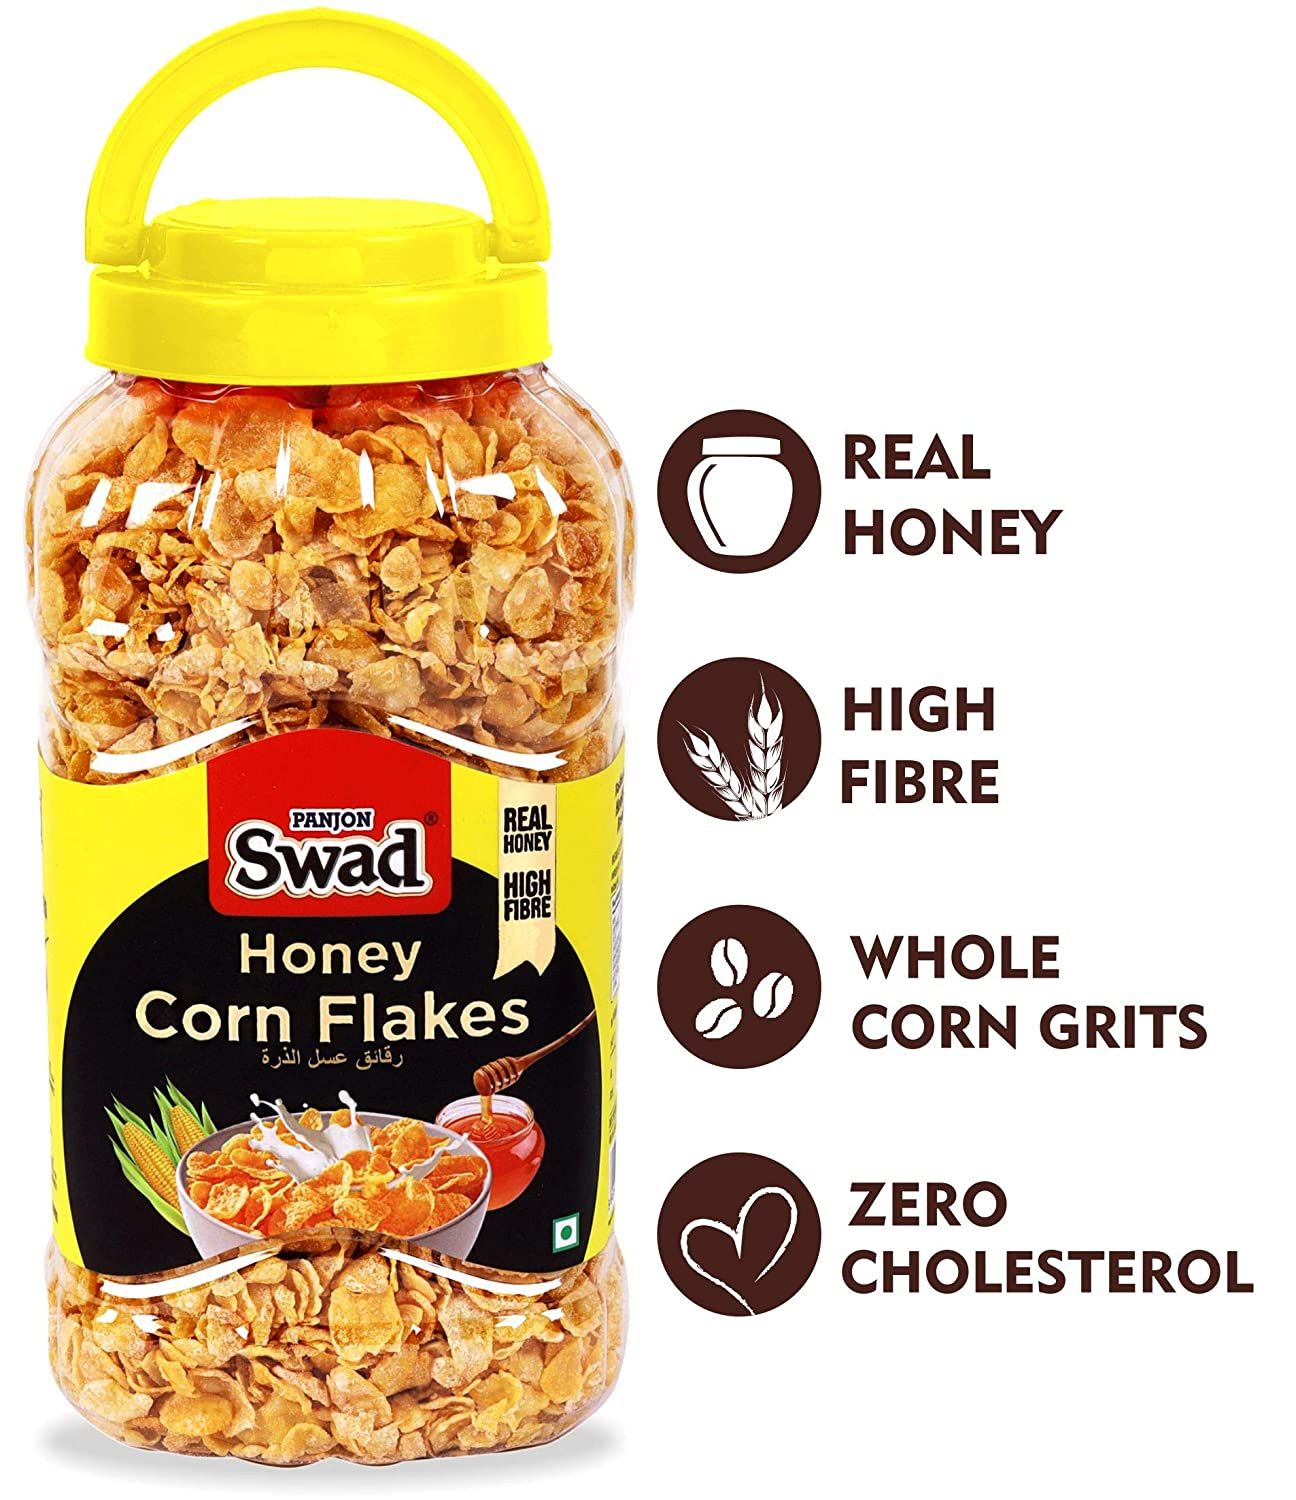 Swad Honey Corn Flakes With Real Honey Image